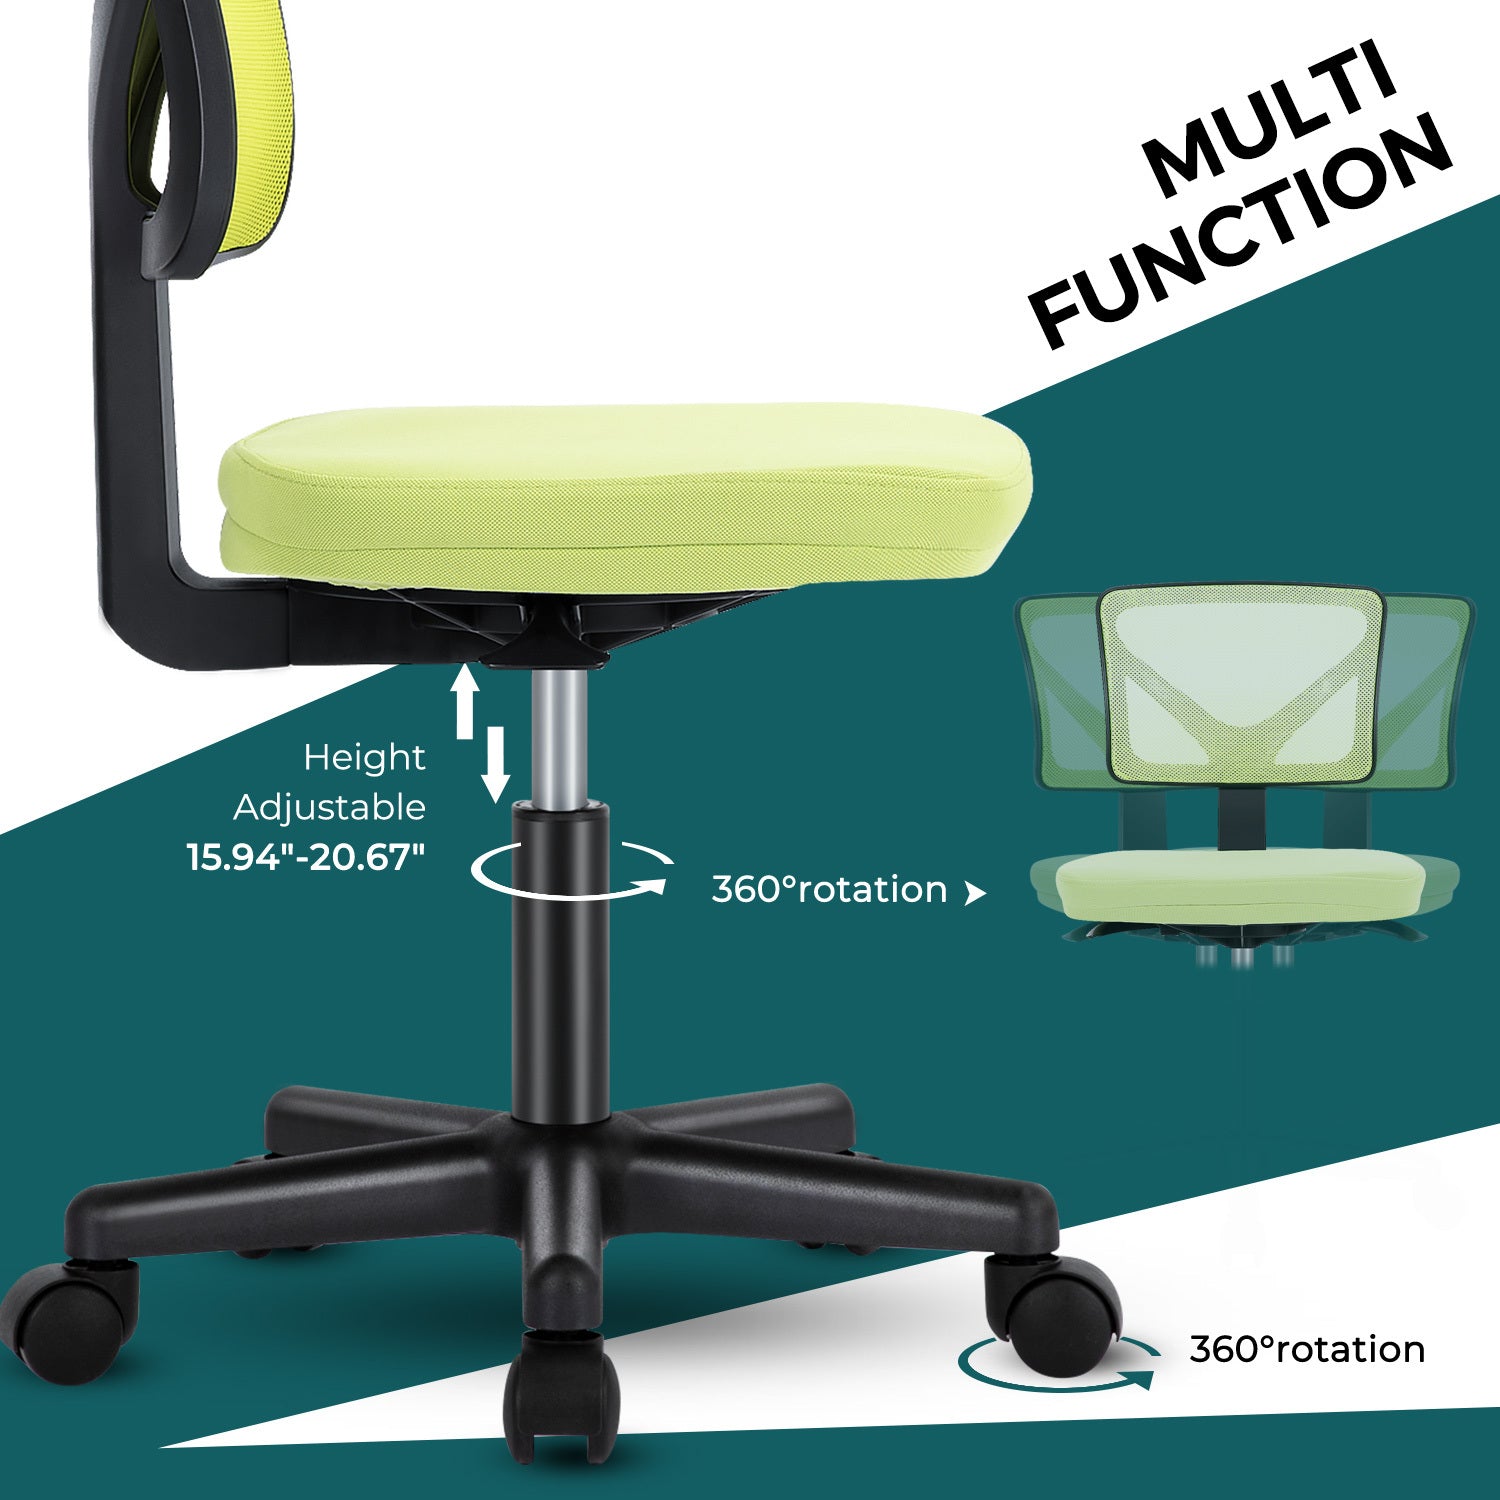 Sweetcrispy Armless Desk Chair Small Home Office Chair green-nylon mesh